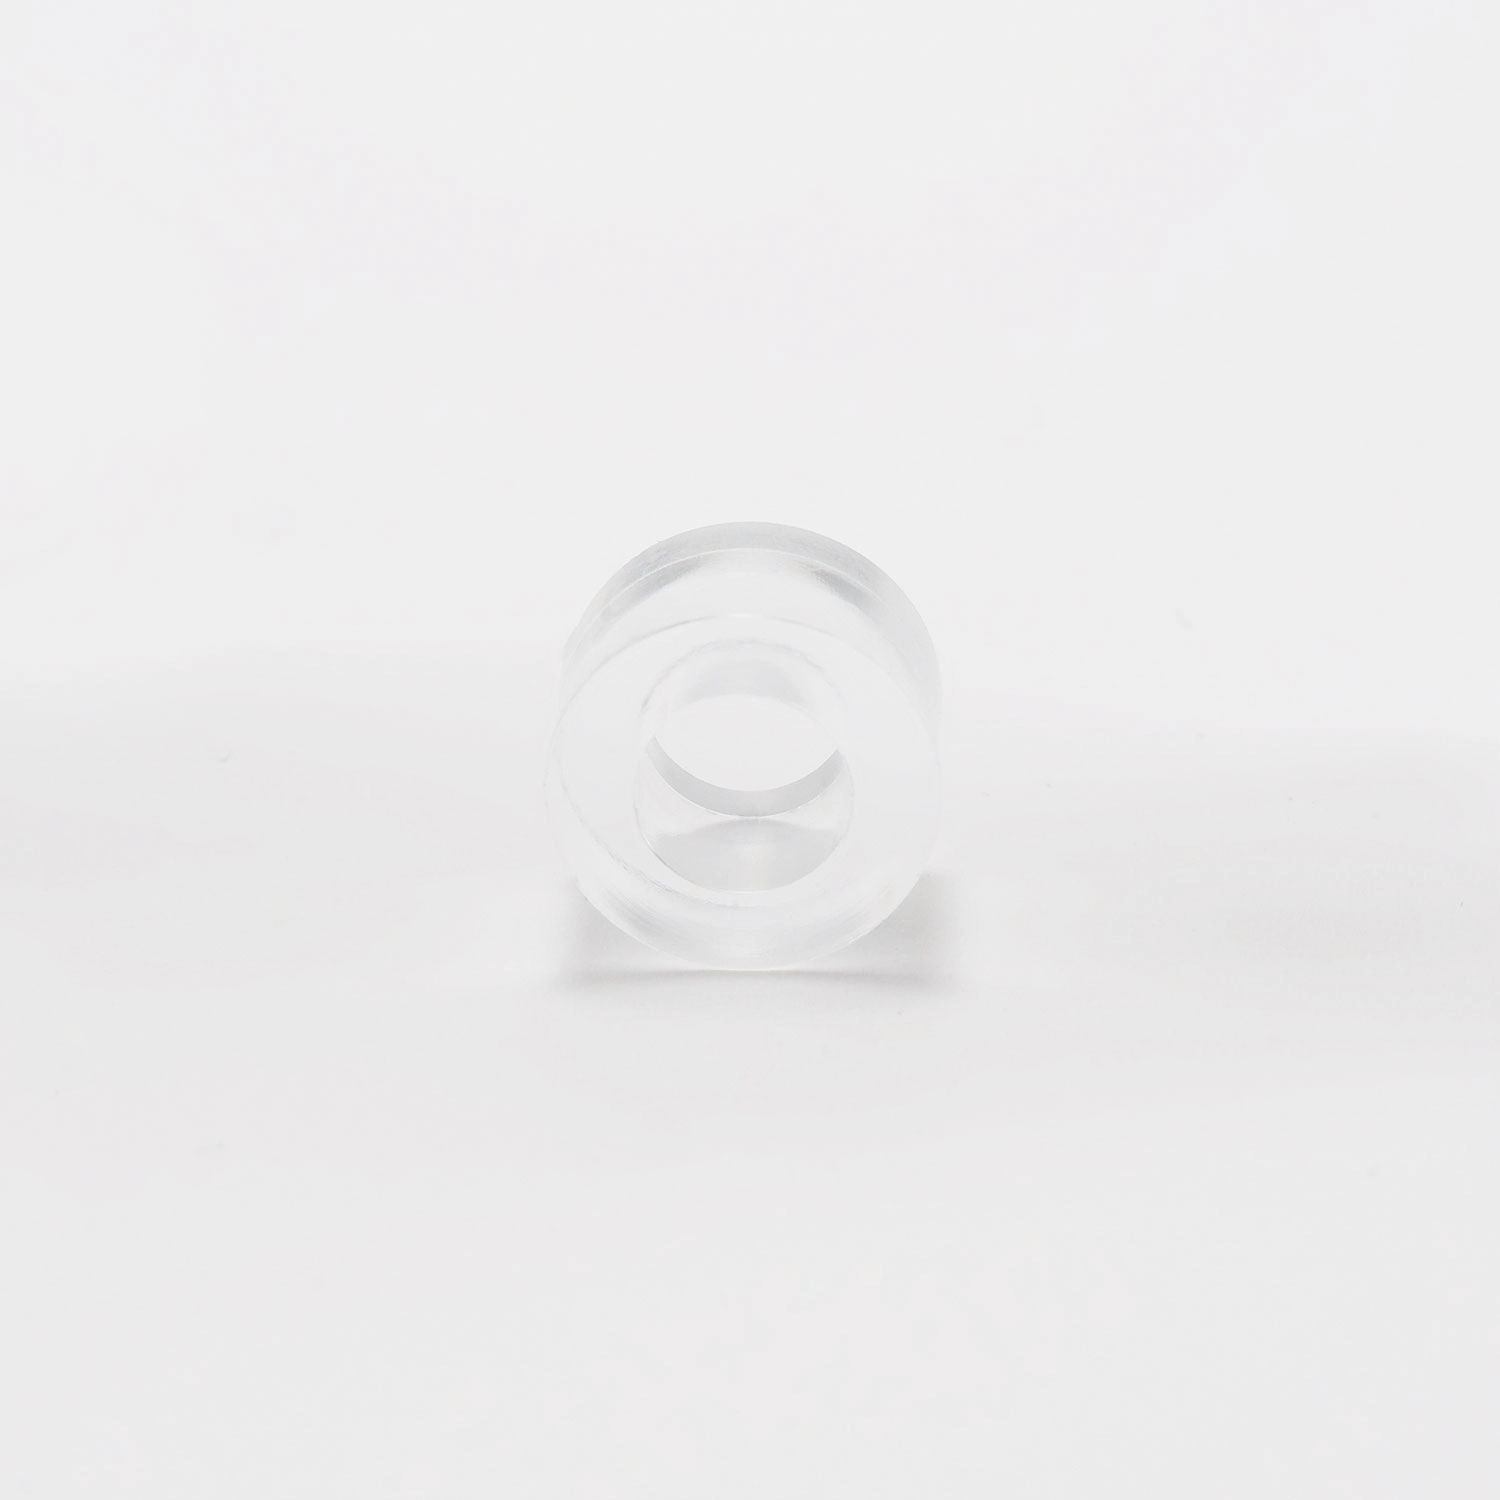 Kunststoff Distanzhülse 7mm in glasklar